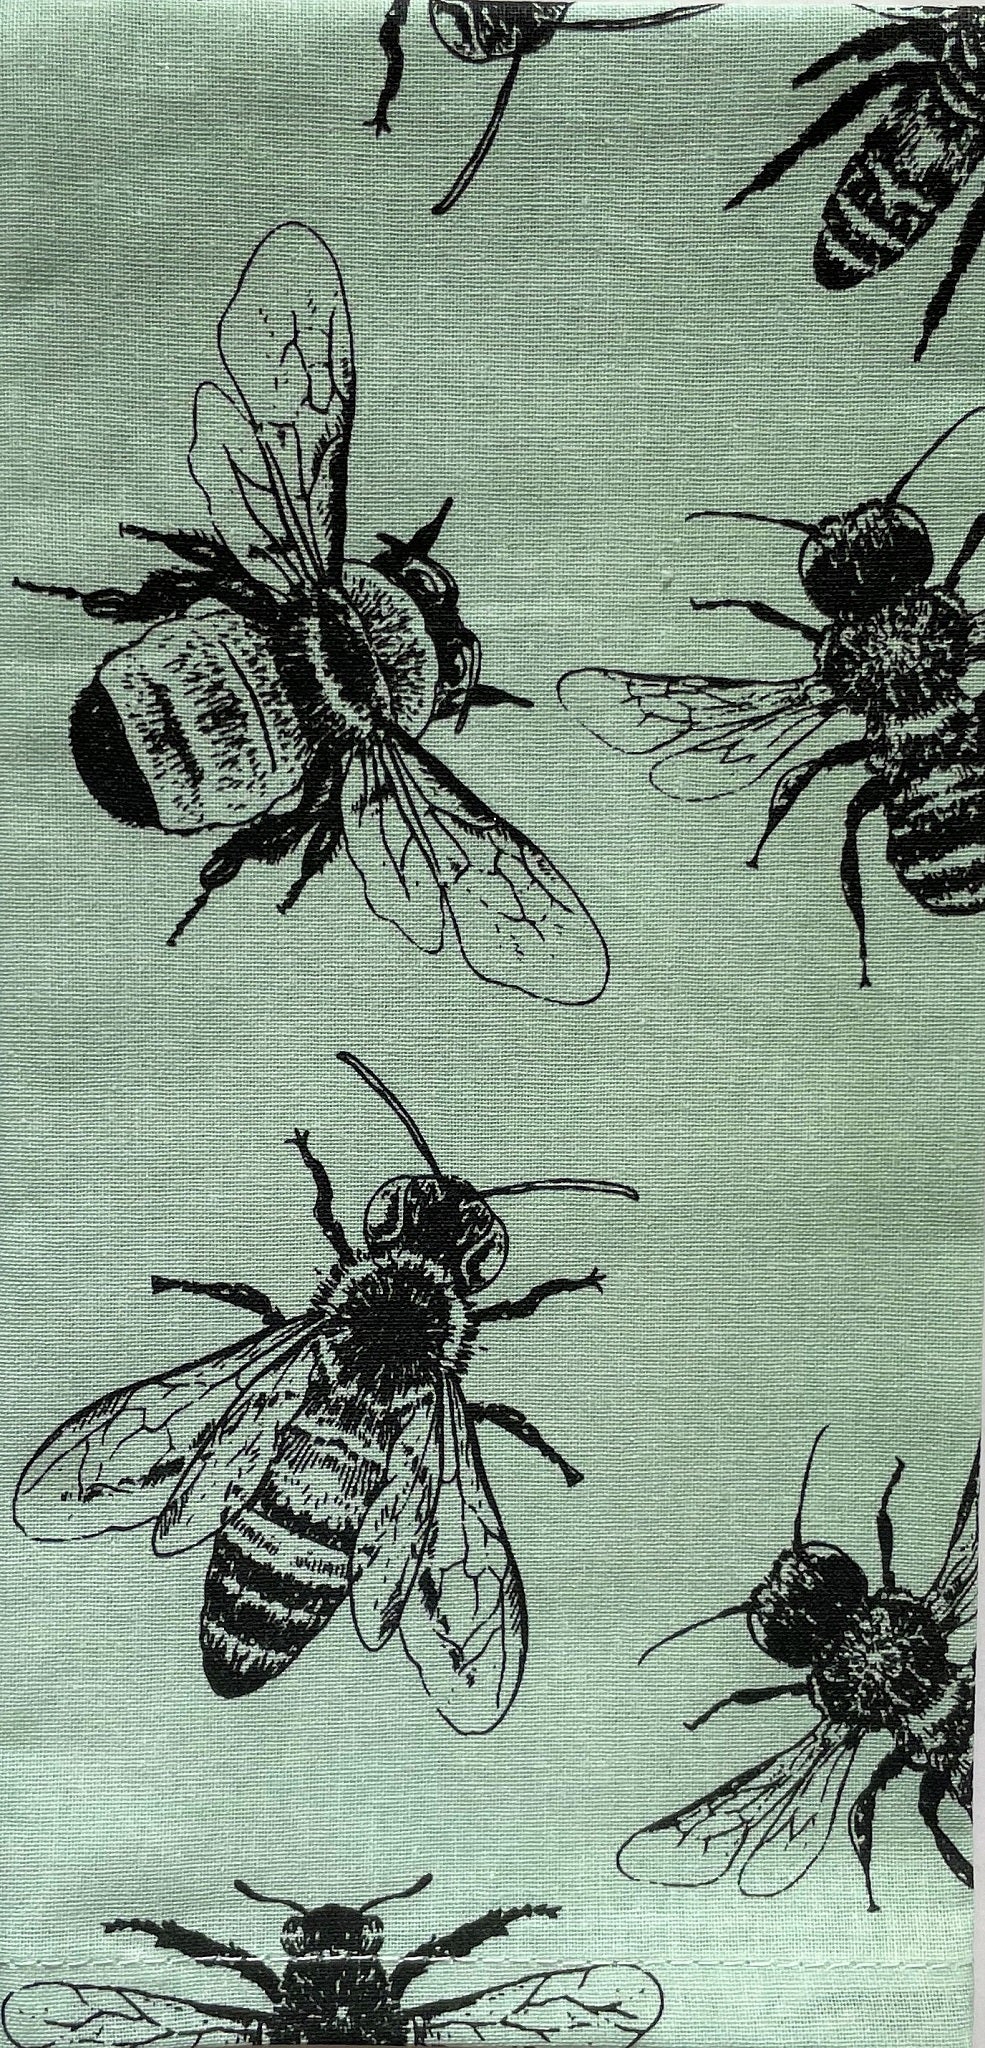 Cotton Napkins - Sketch Bees (Set of 4)